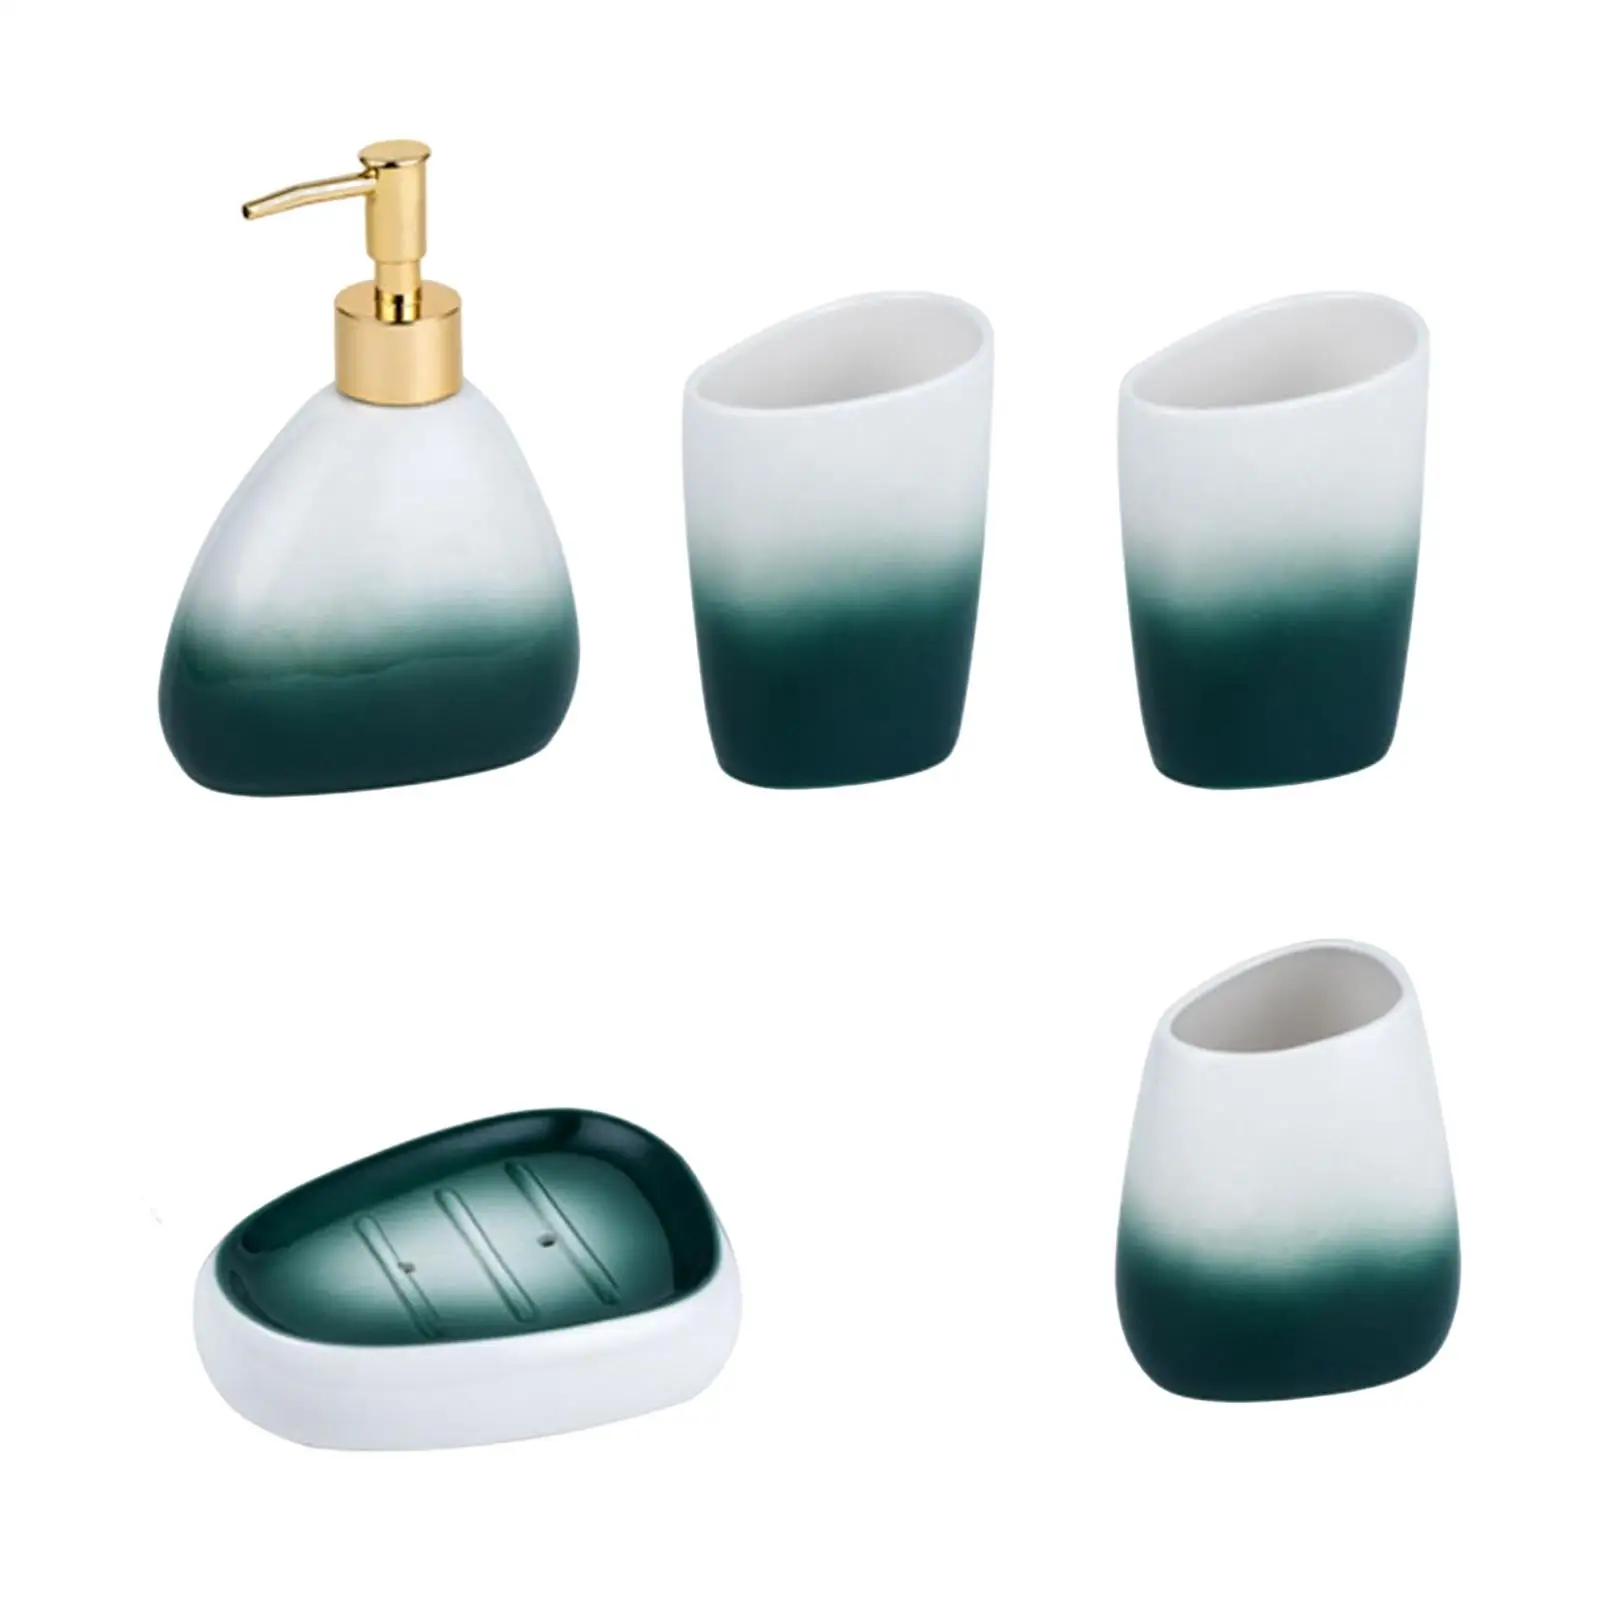 5x Ceramic Bathroom Accessories Set Toothbrush Holder Decor for Washing Room